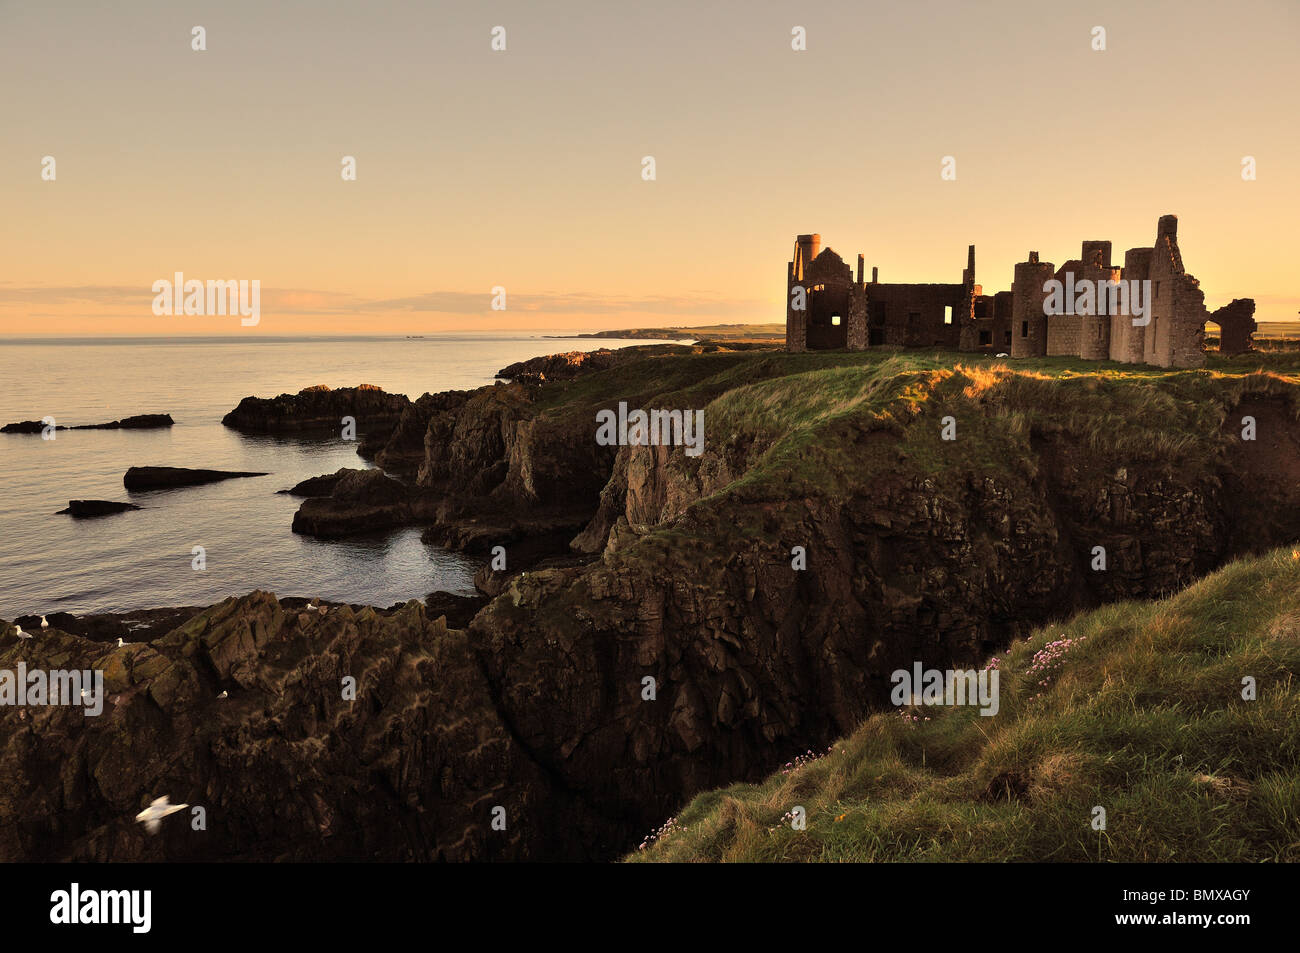 Slains Castle at sunset, Aberdeenshire, Scotland Stock Photo